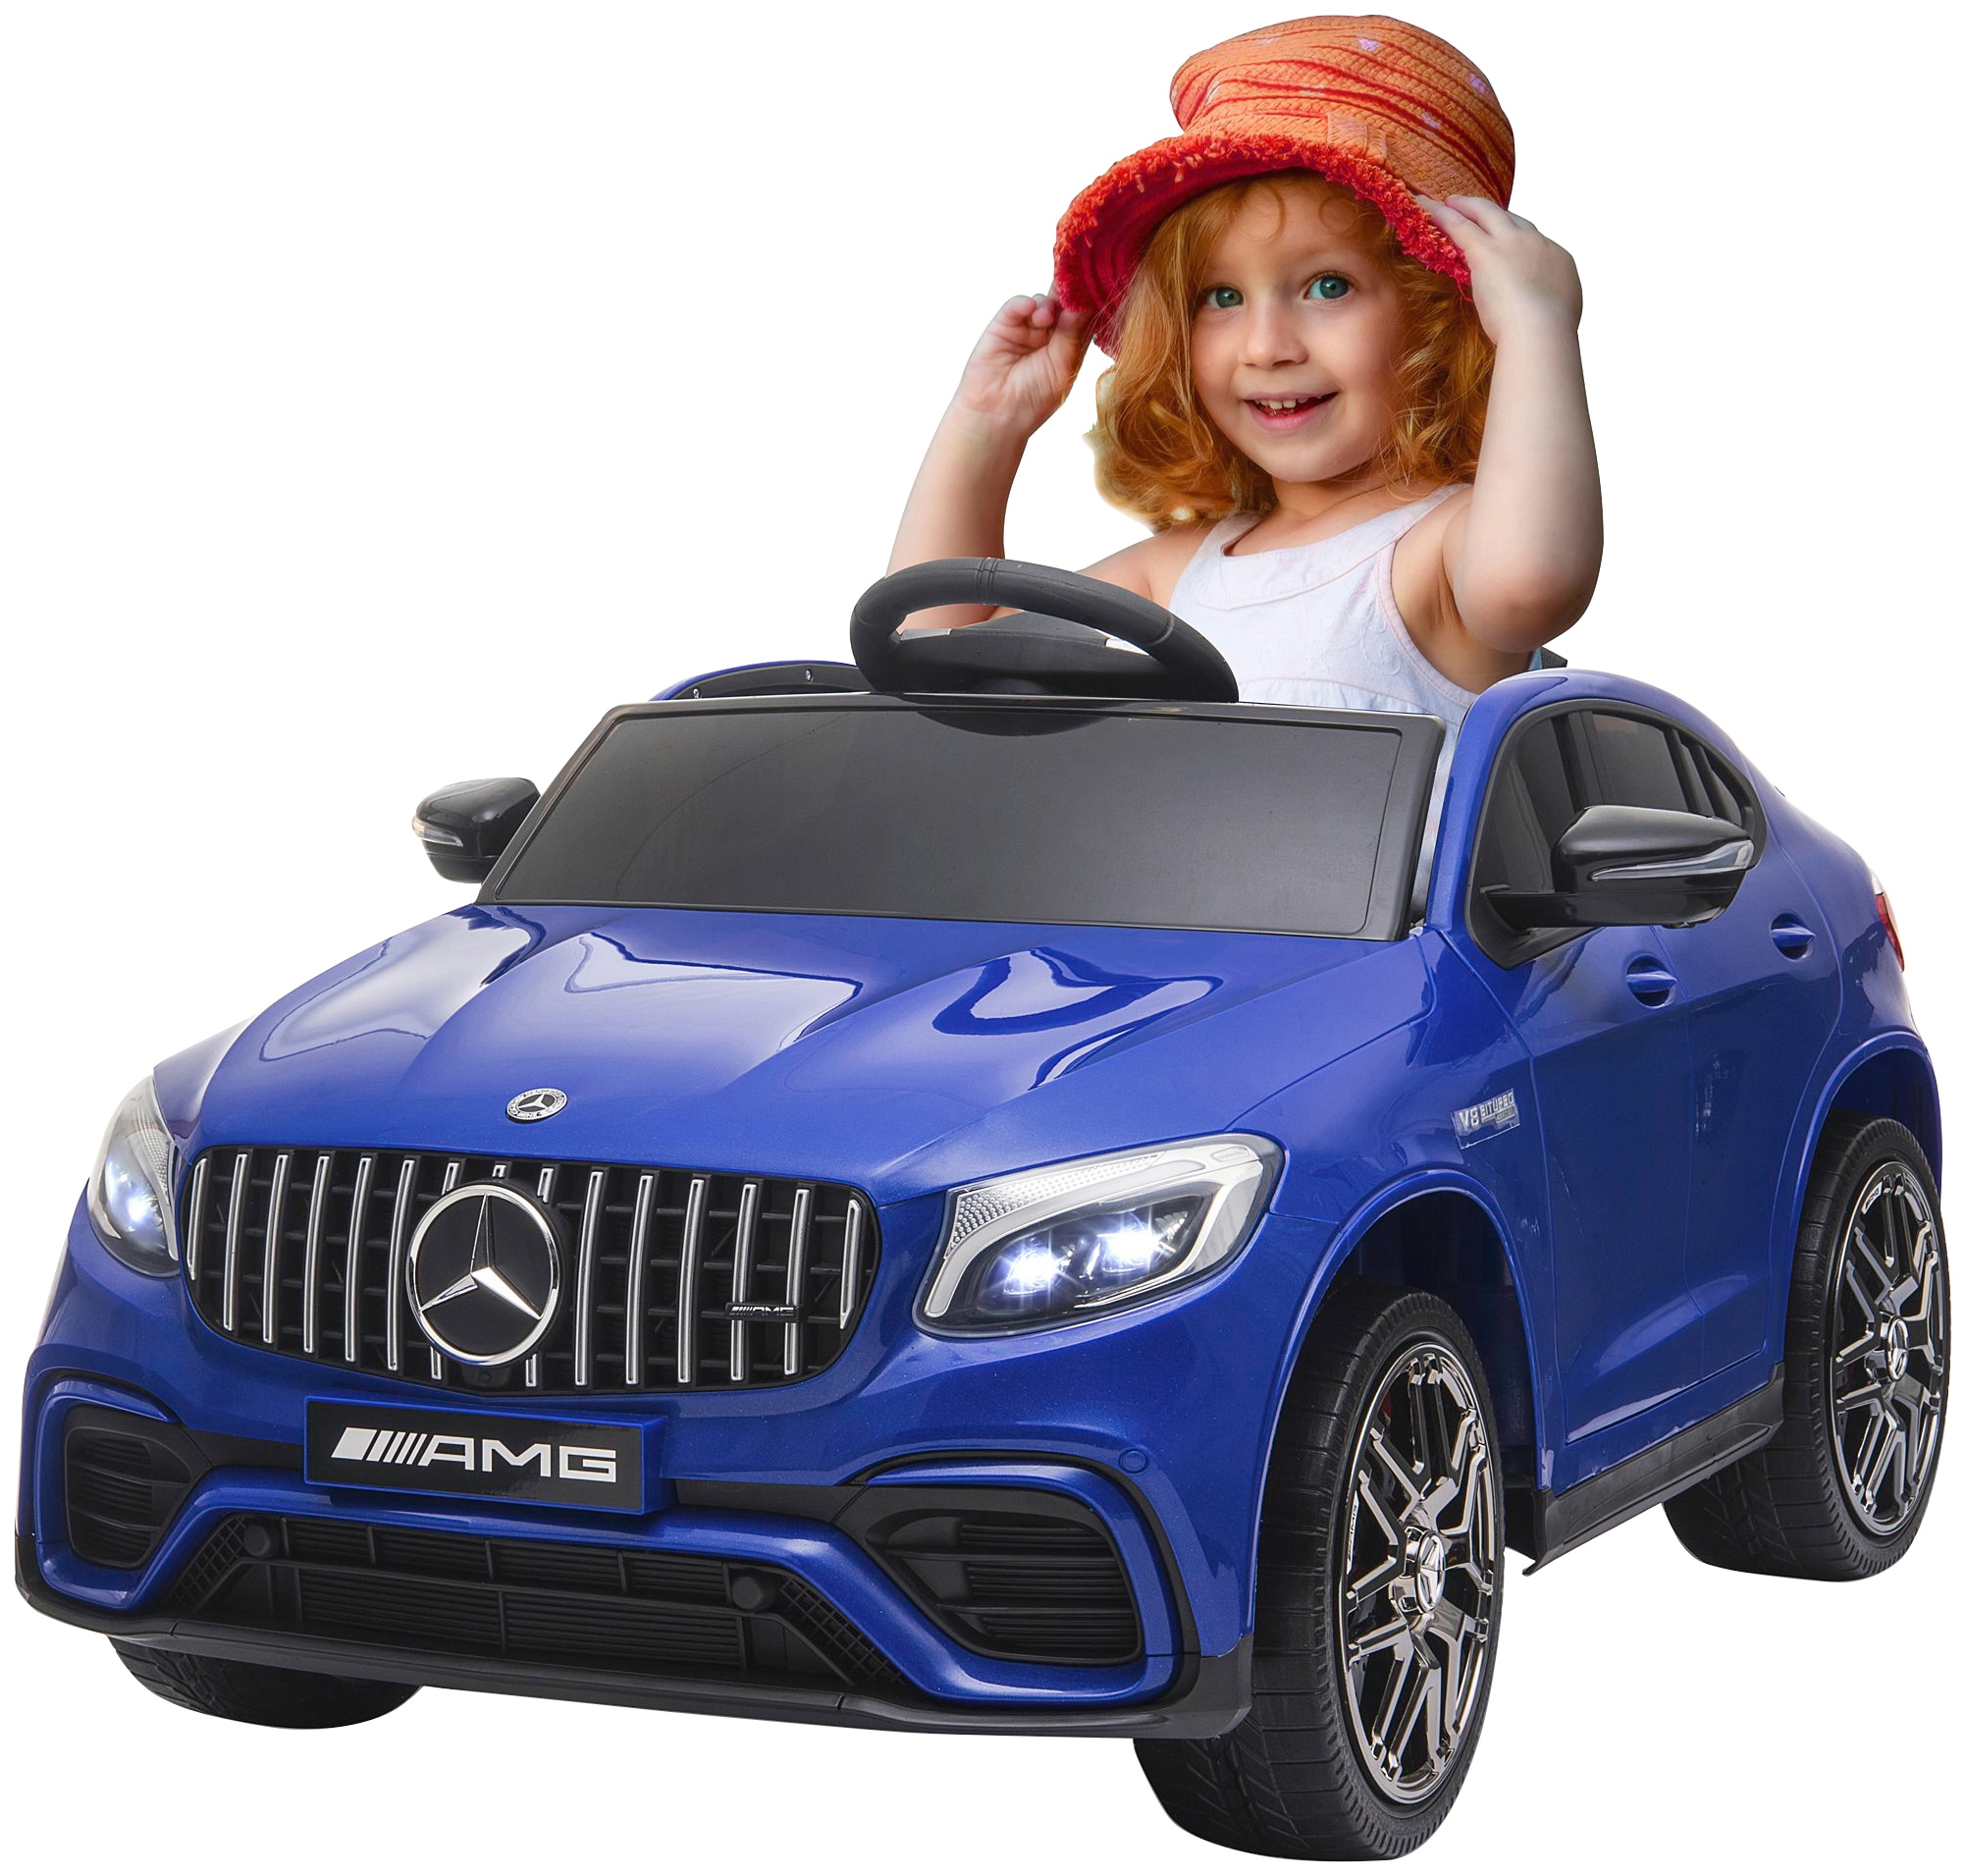 Elektro-Kinderauto »Ride-on Mercedes-Benz AMG«, ab 3 Jahren